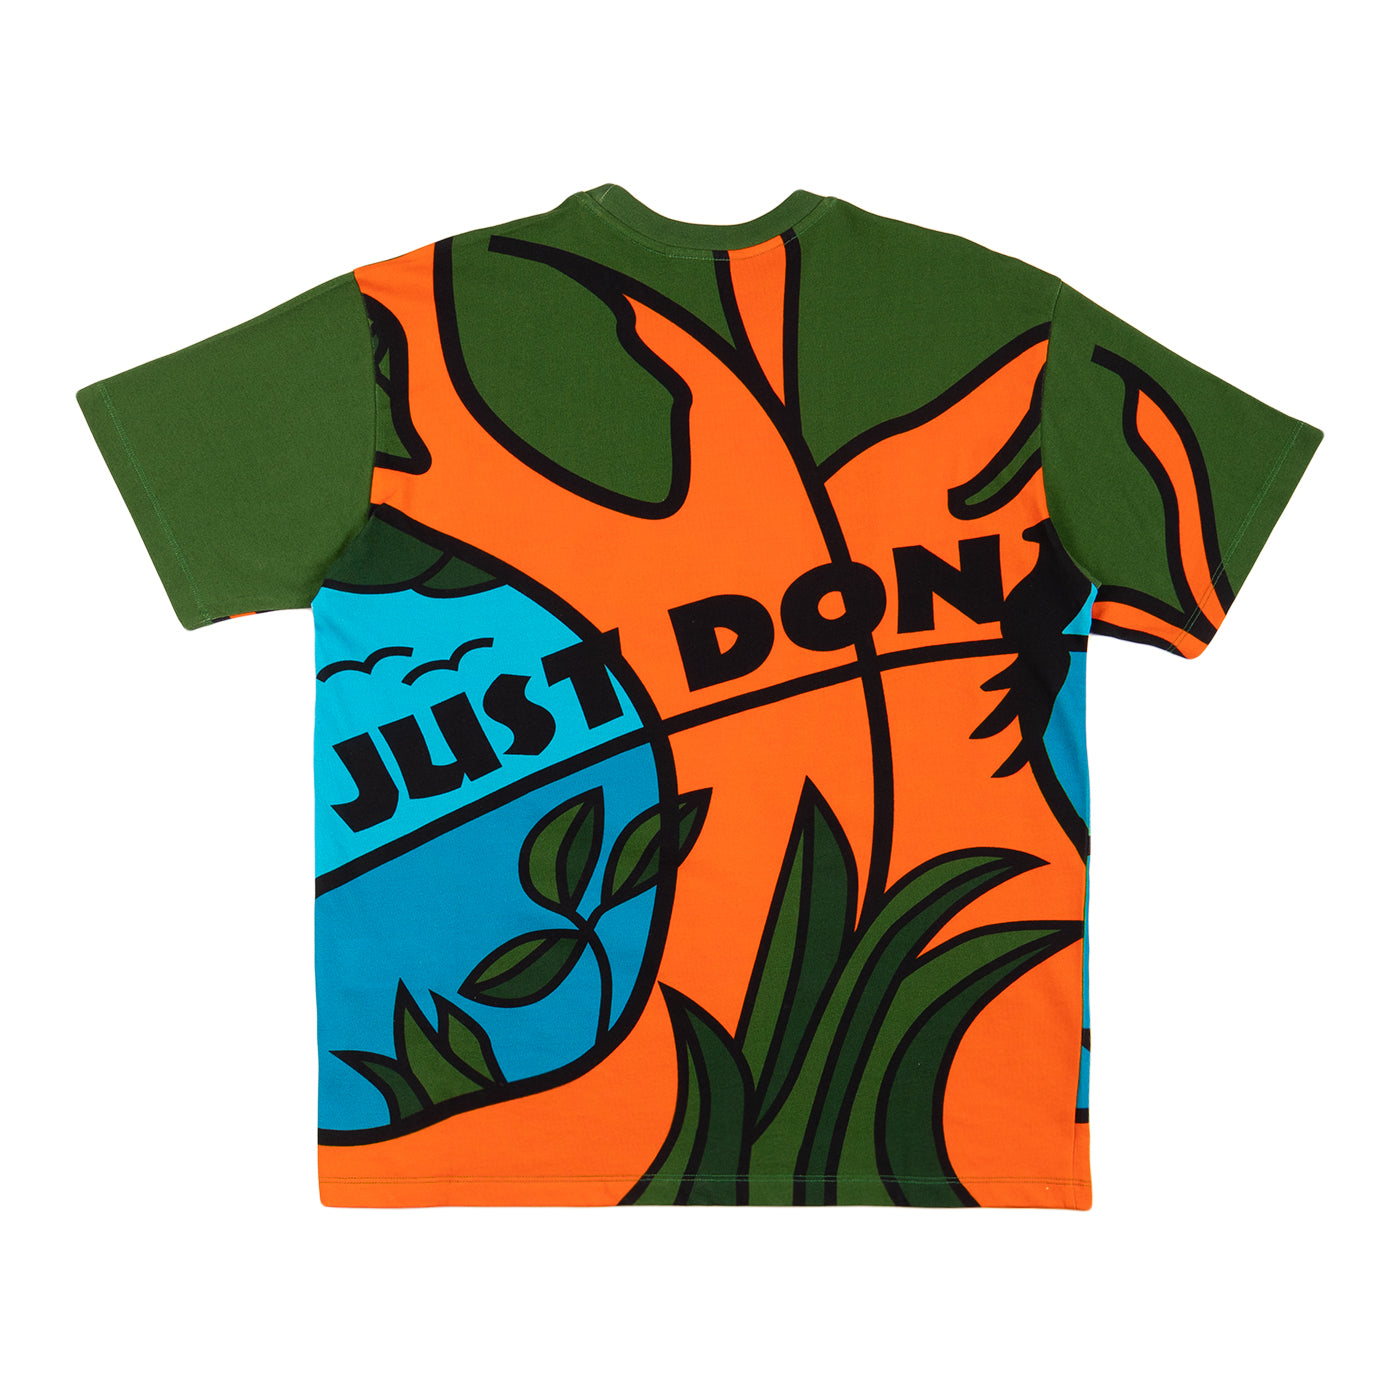 The Jungle T-Shirt